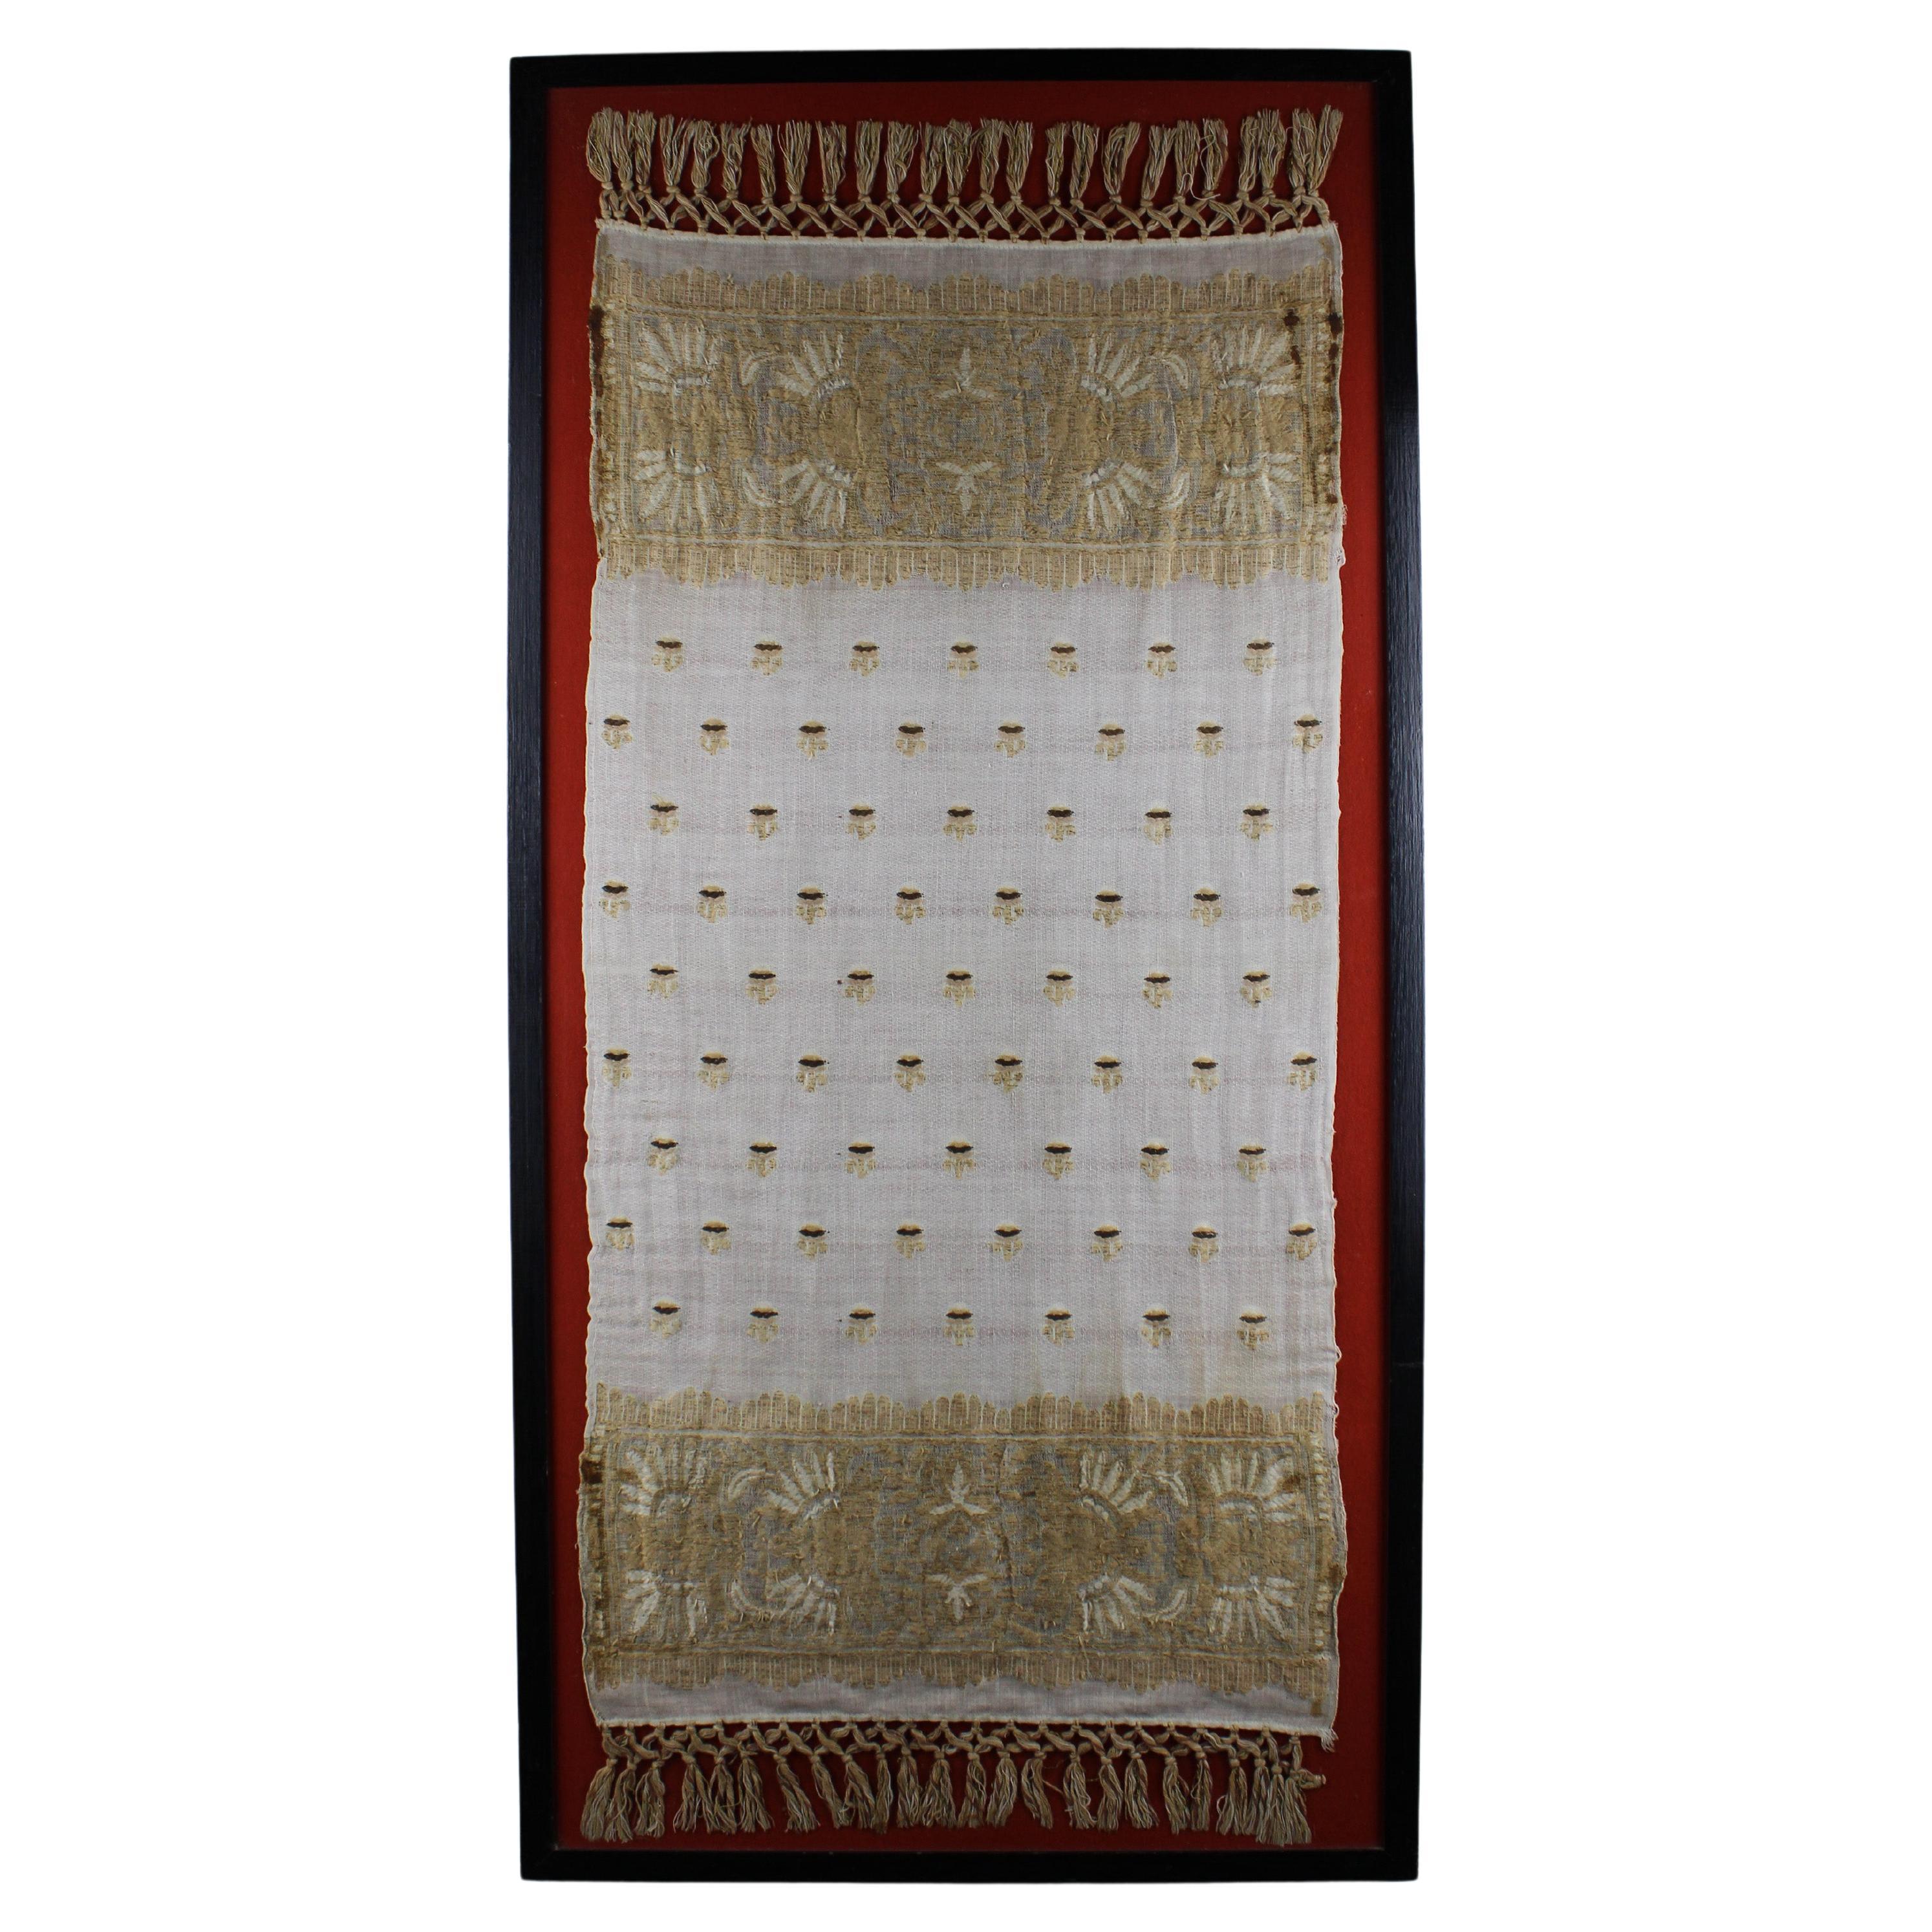 19th century Ottoman Linen and Gold Metallic Weaved Towel Framed Turkey